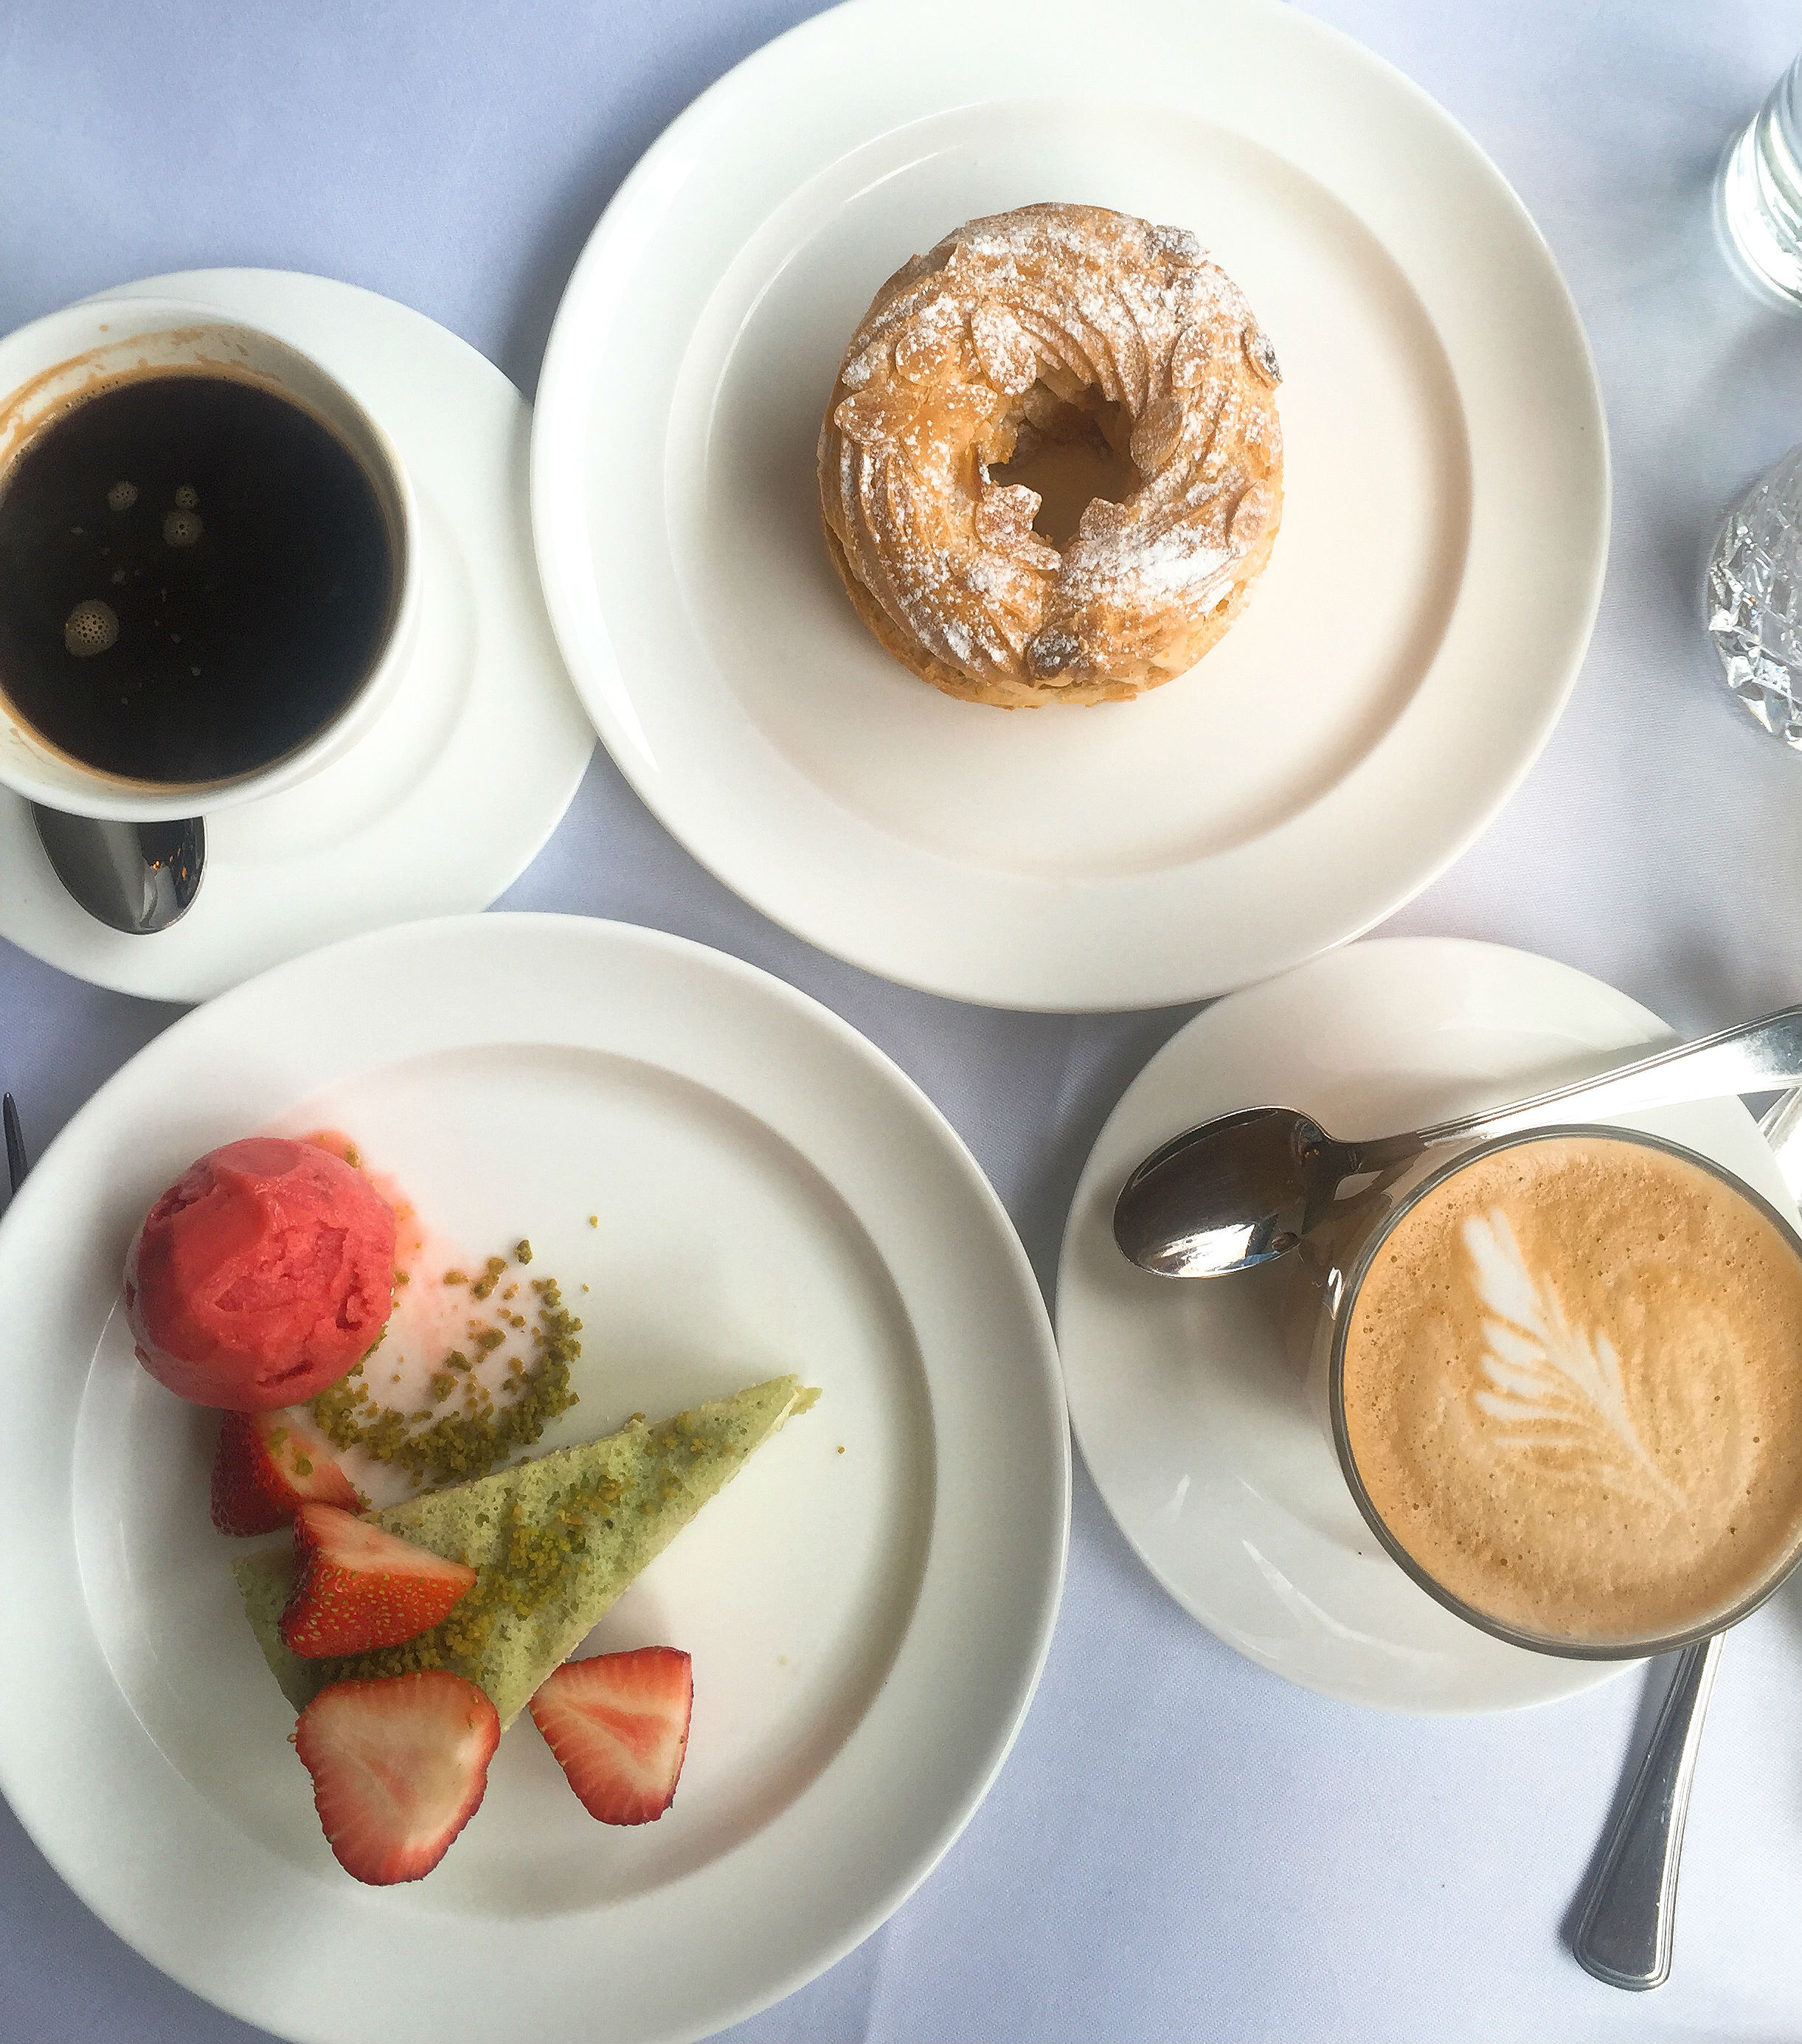 Dessert and coffee - Cafe Monico review